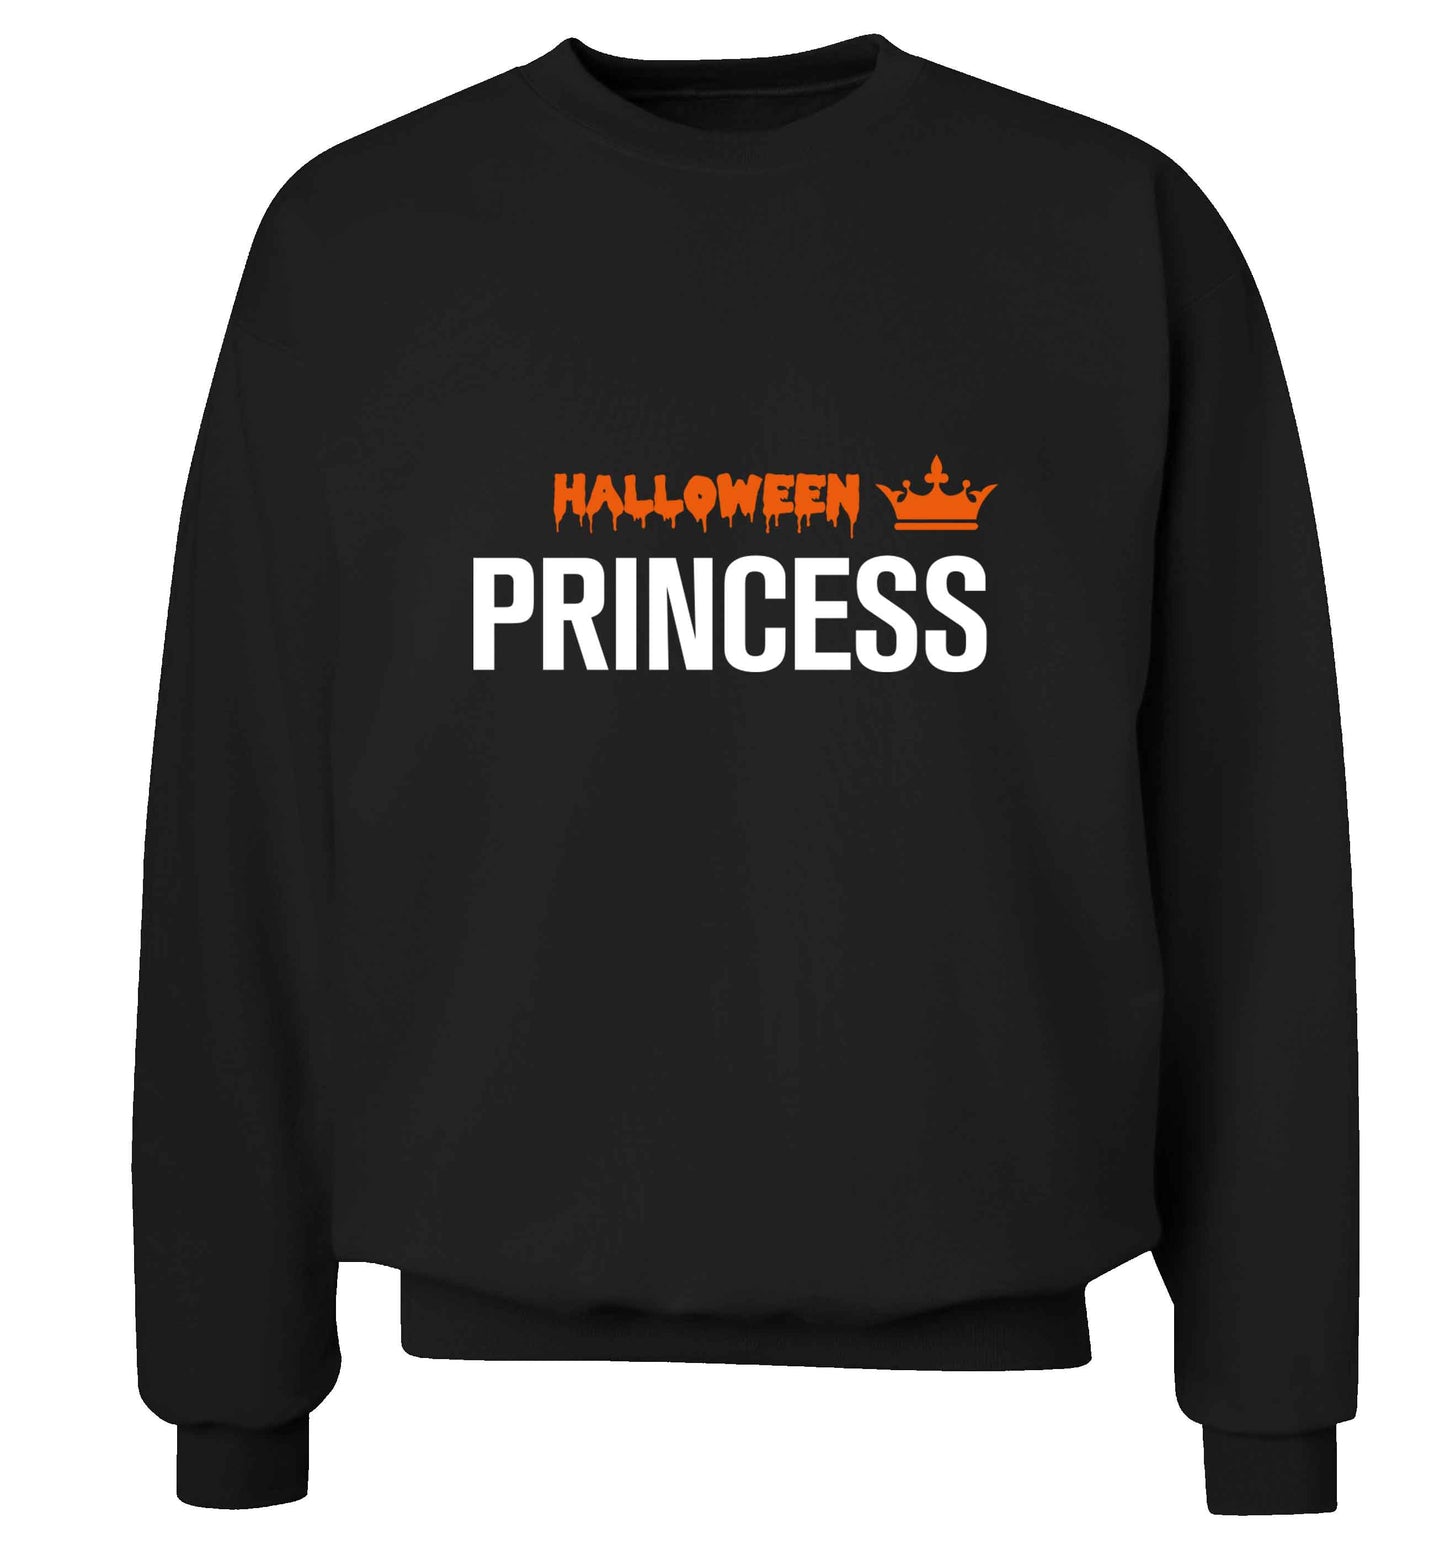 Halloween princess adult's unisex black sweater 2XL